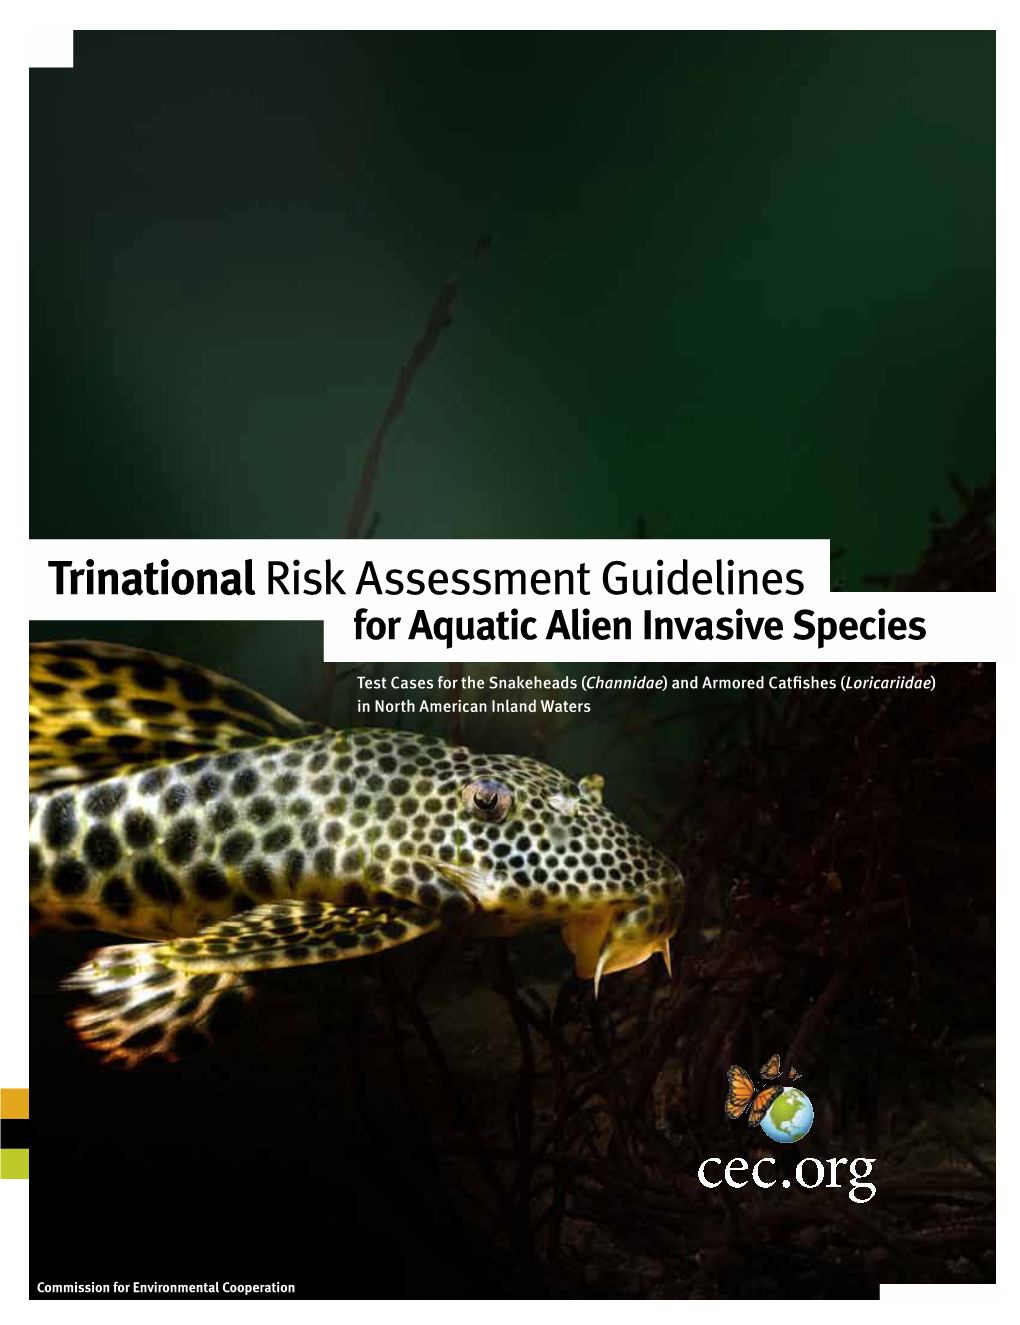 Trinational Risk Assessment Guidelines for Aquatic Alien Invasive Species